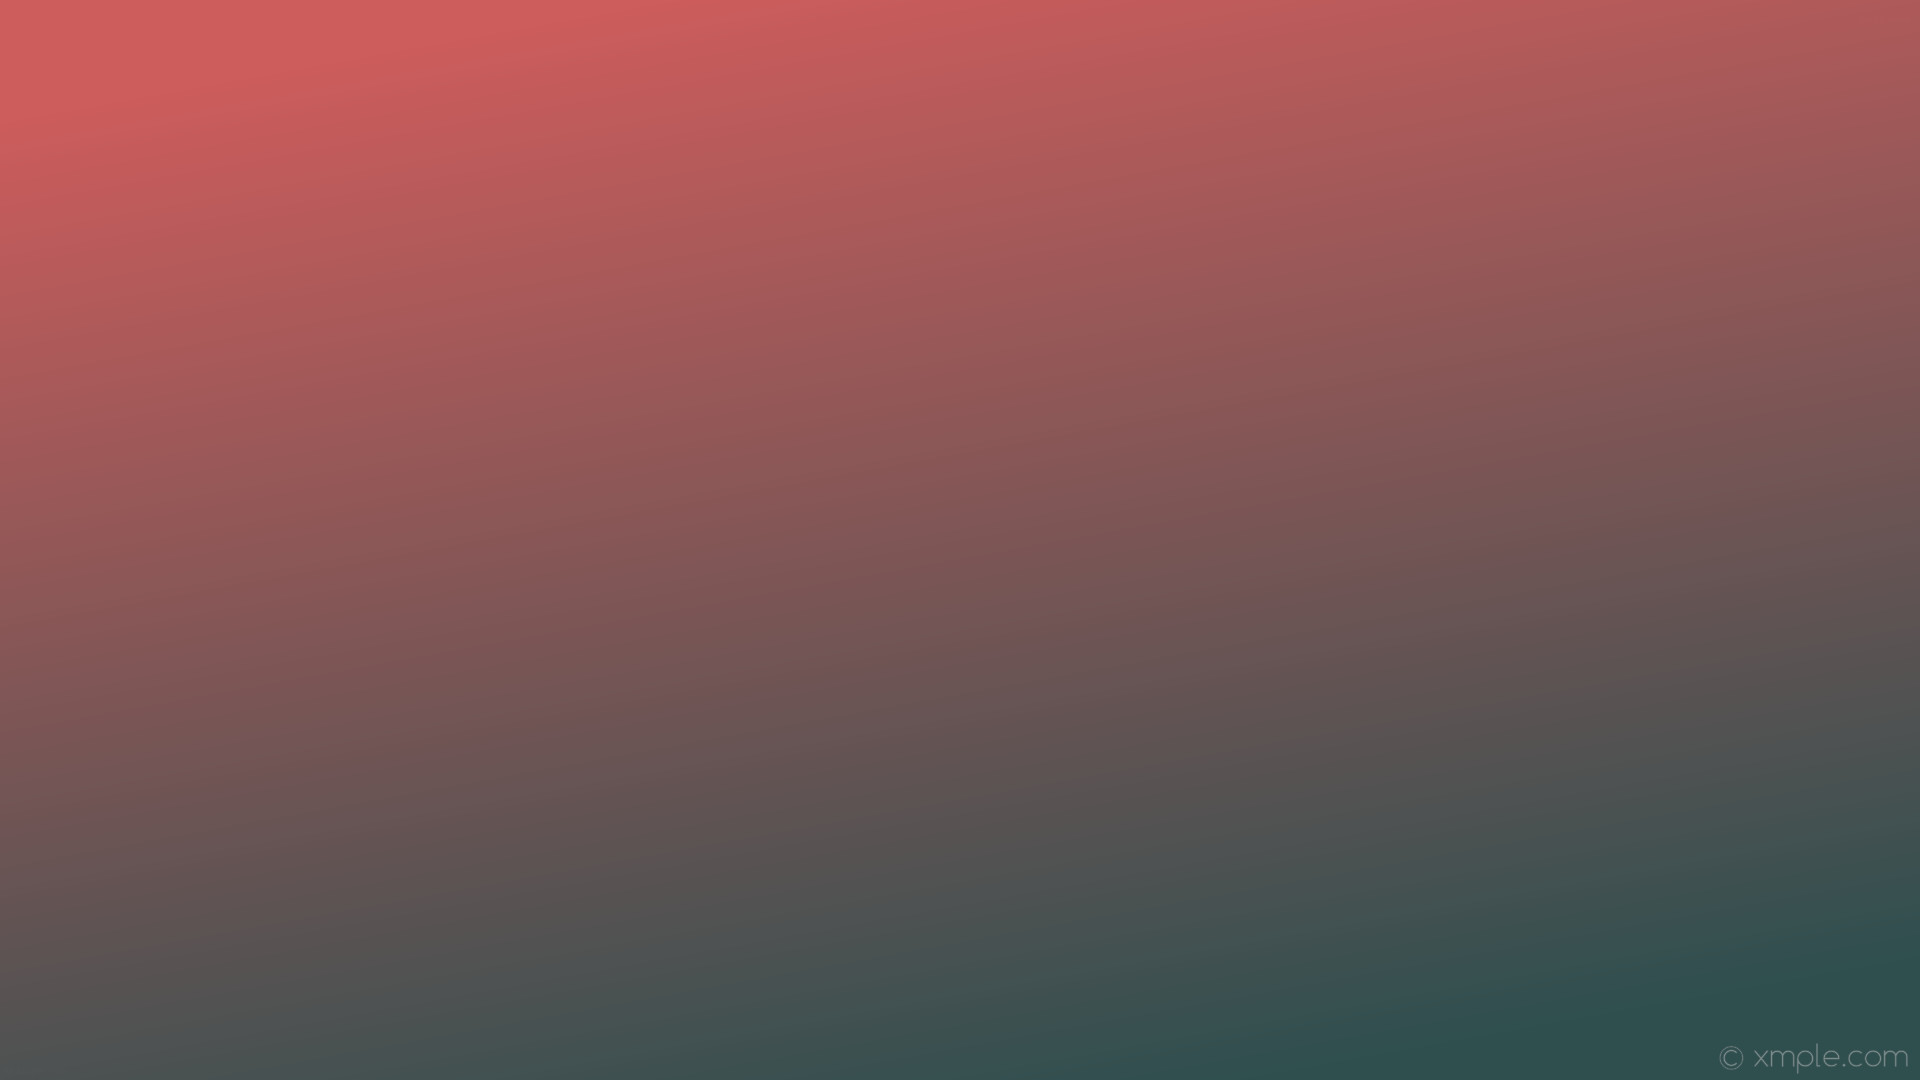 1920x1080 wallpaper linear red grey gradient indian red dark slate gray #cd5c5c  #2f4f4f 120Â°